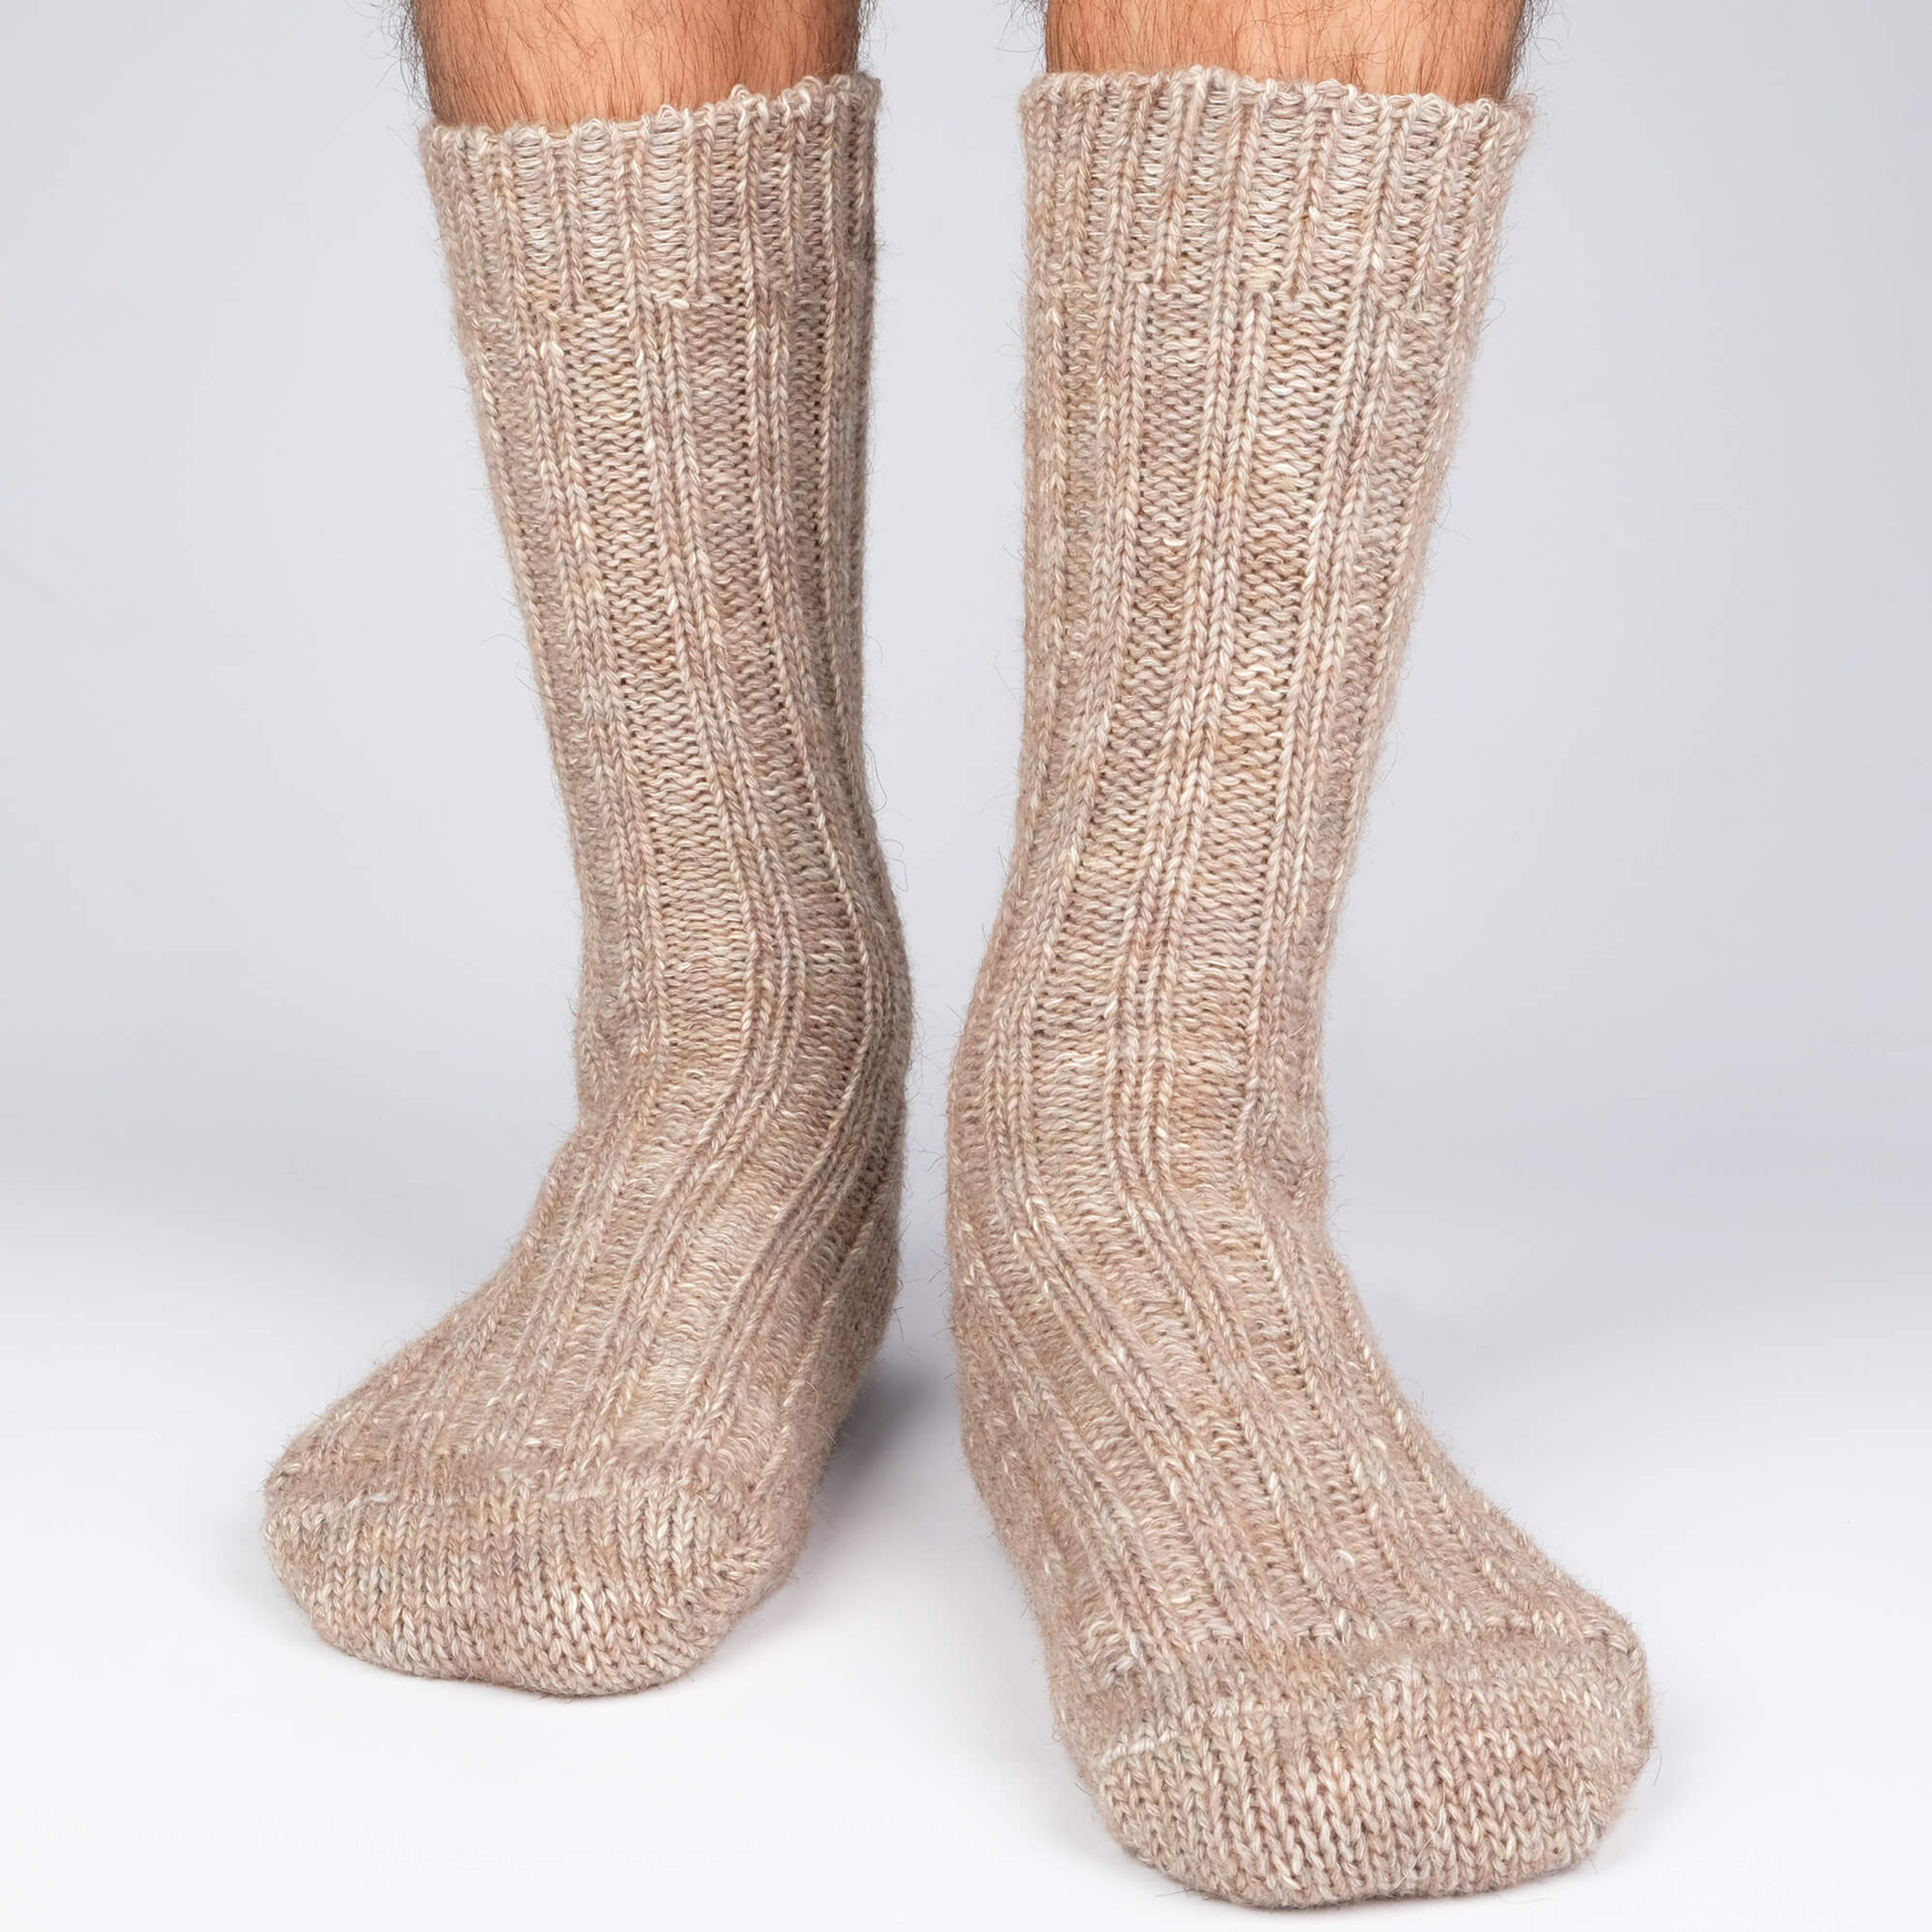 Niseko Men's Socks - Brown